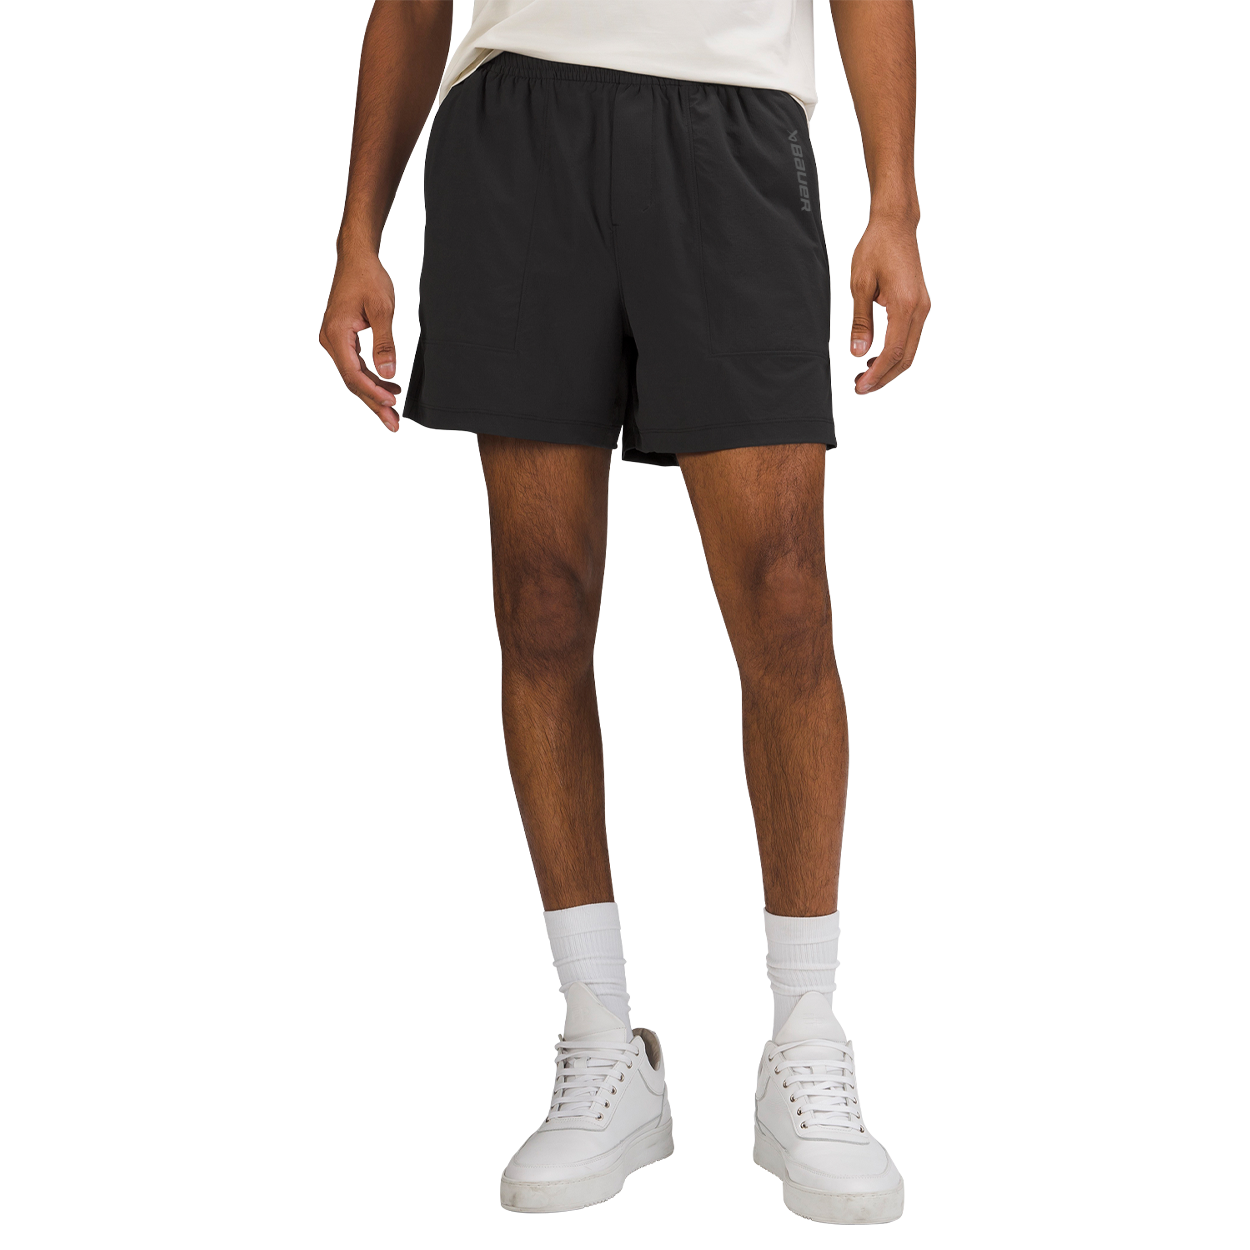 Bowline Short 5 *Stretch Ripstop, Men's Shorts